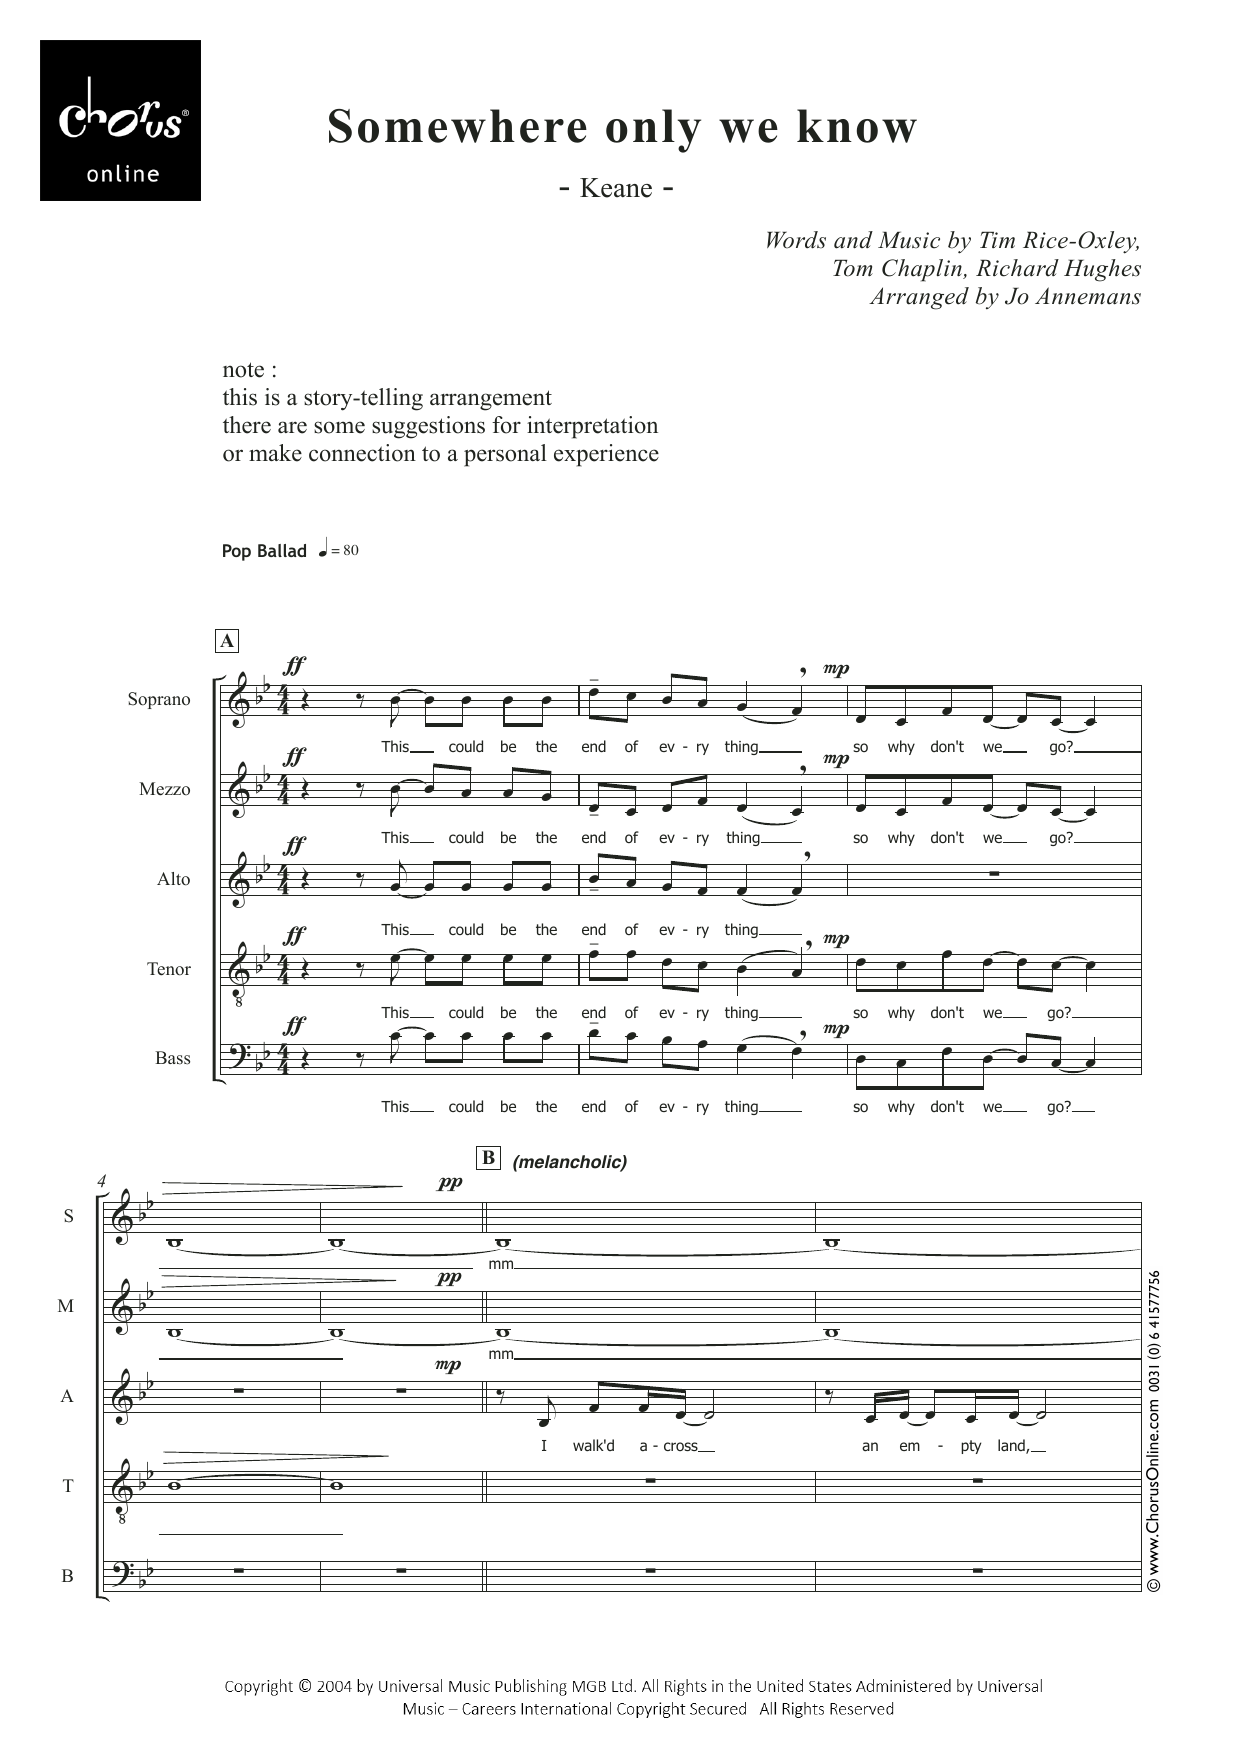 Keane Somewhere Only We Know (arr. Jo Annemans) sheet music notes printable PDF score